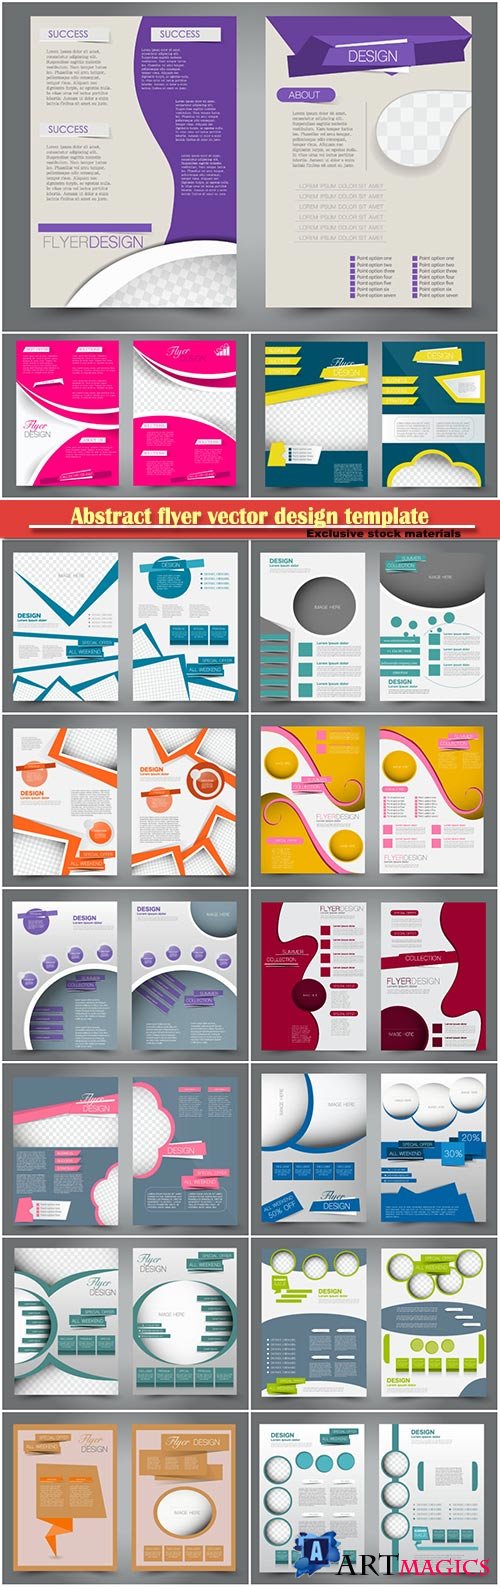 Abstract flyer vector design template, business brochure